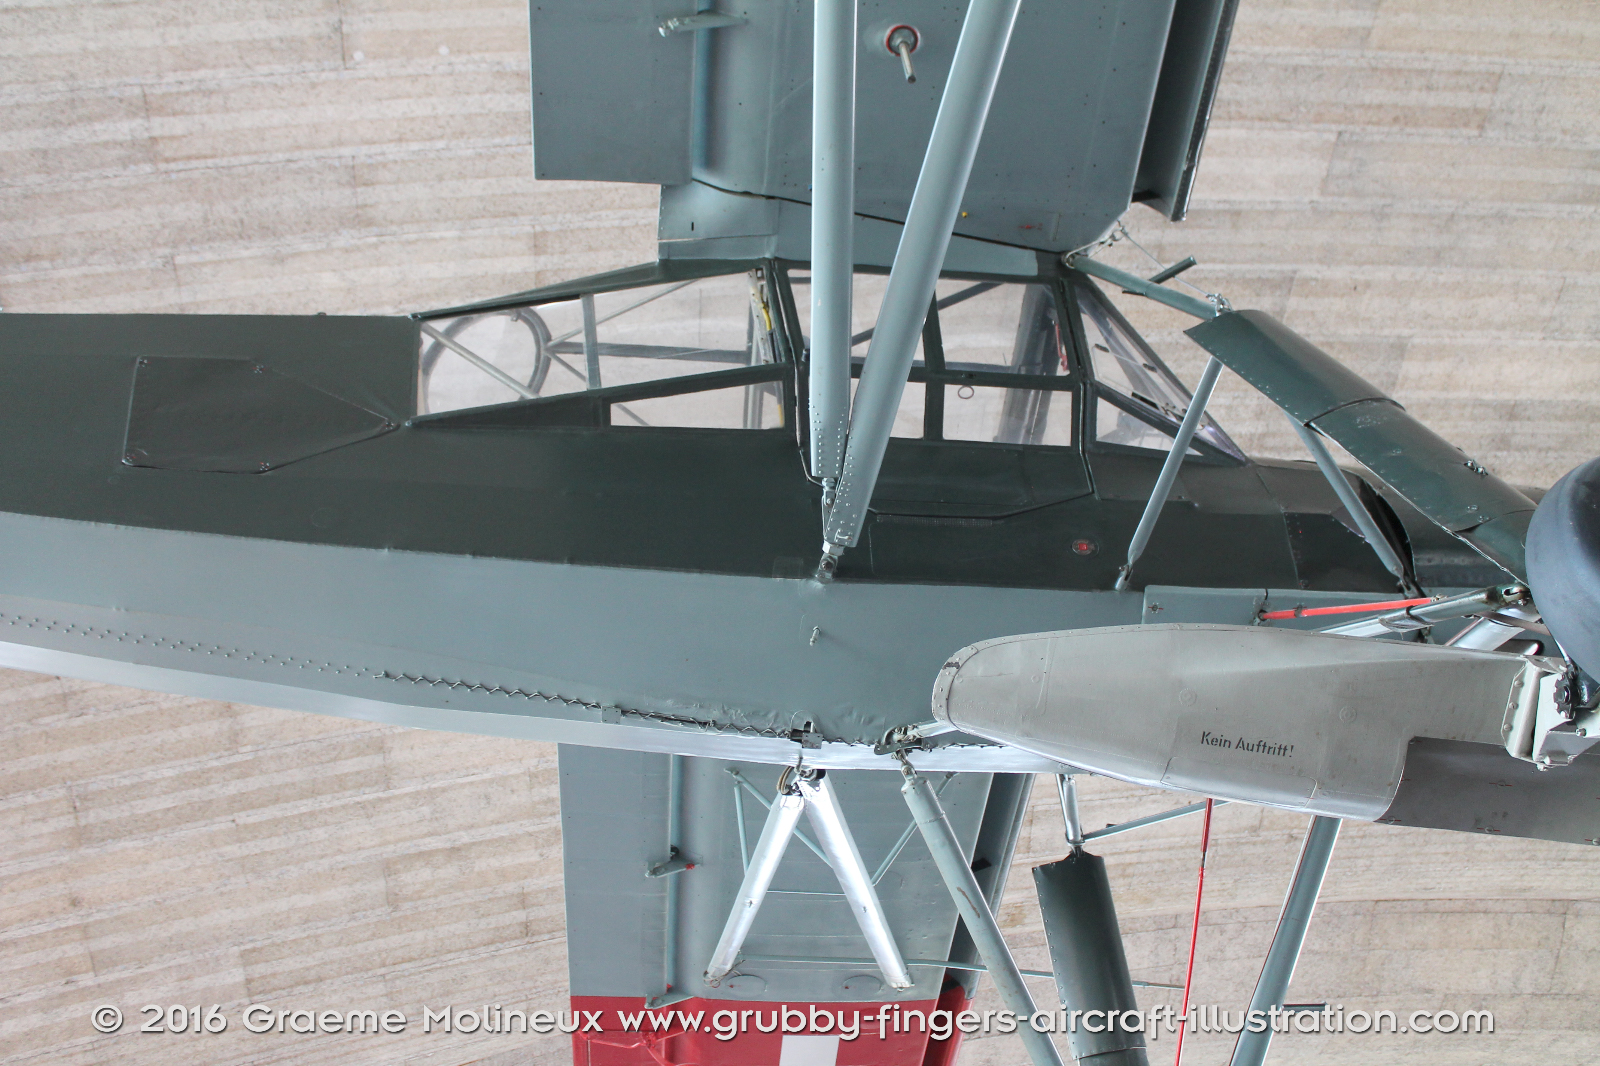 FIESELER_Storch_A-100_Swiss_Air_Force_Museum_2015_10_GrubbyFingers